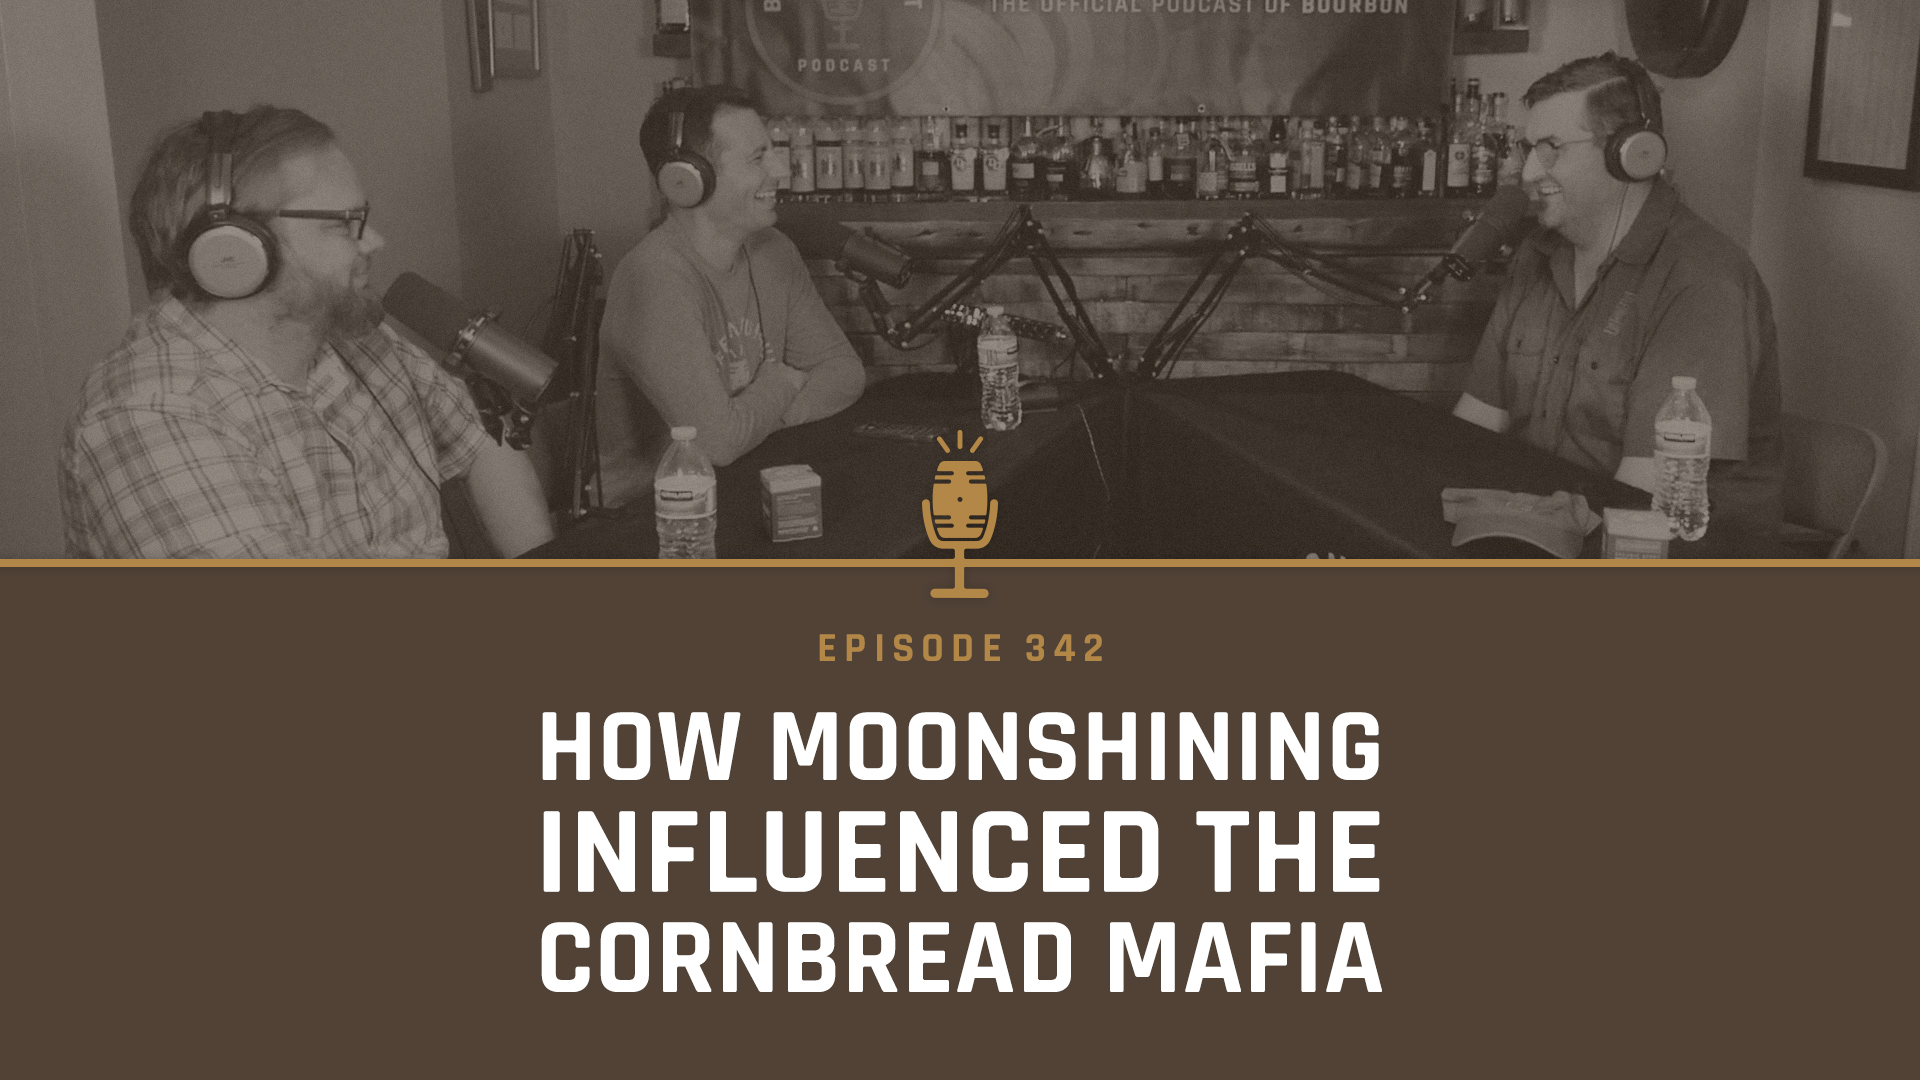 342 - How Moonshining Influenced The Cornbread Mafia with James Higdon